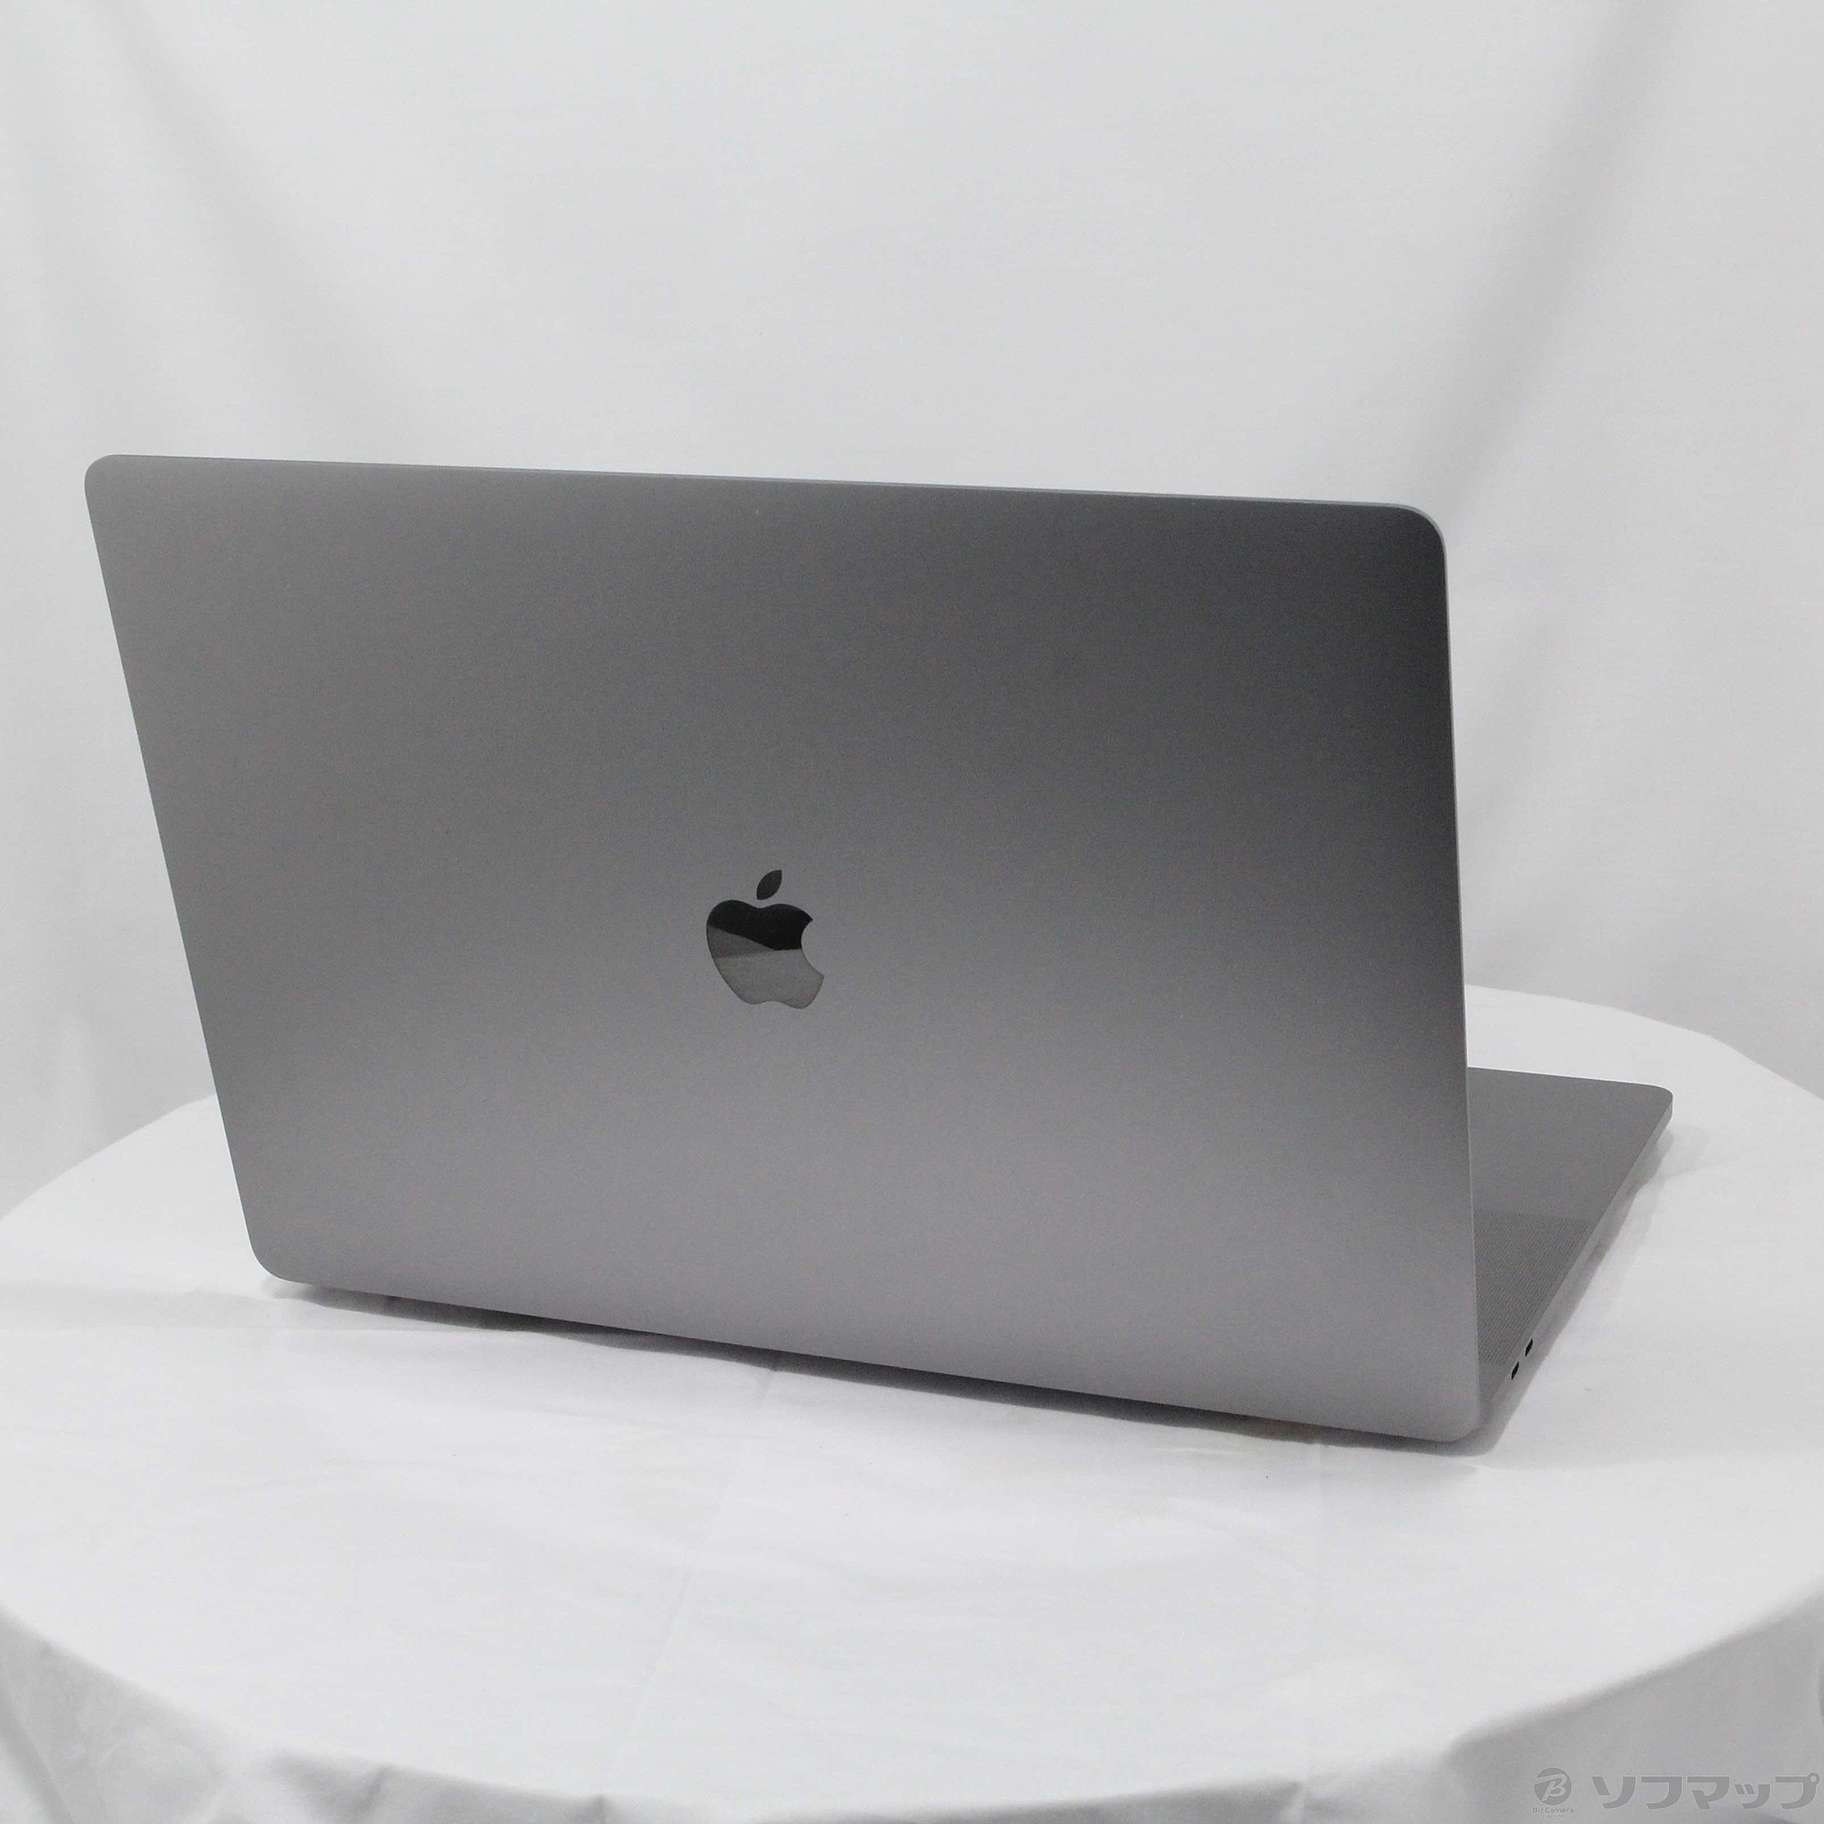 中古品〕 MacBook Pro 16-inch Late 2019 MVVJ2J／A Core_i7 2.6GHz 